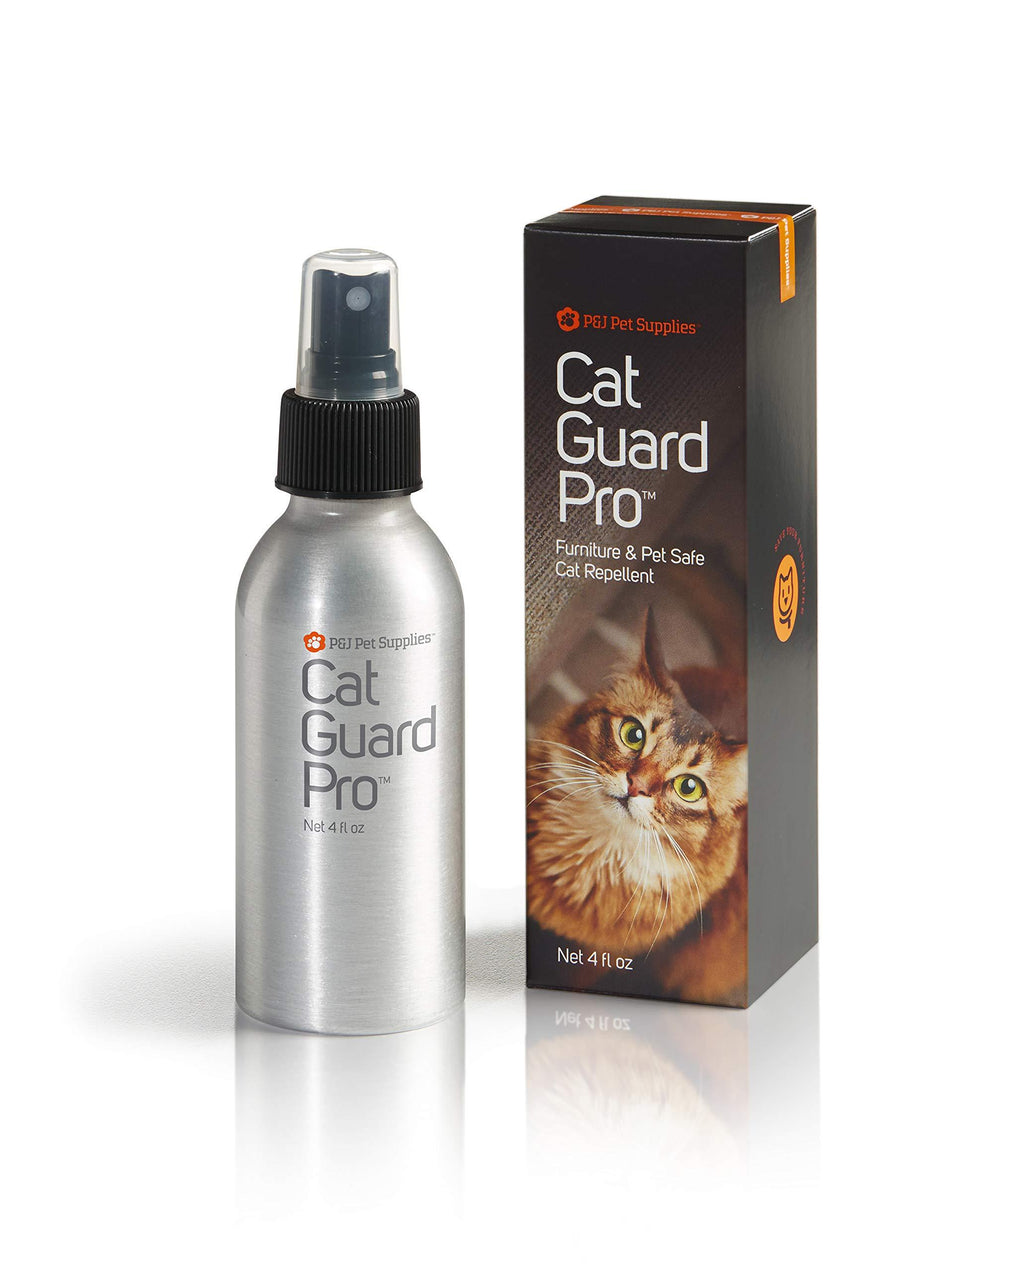 [Australia] - Cat Guard Pro Pet Safe Furniture Cat Repellent - 4oz Spray Bottle Original 